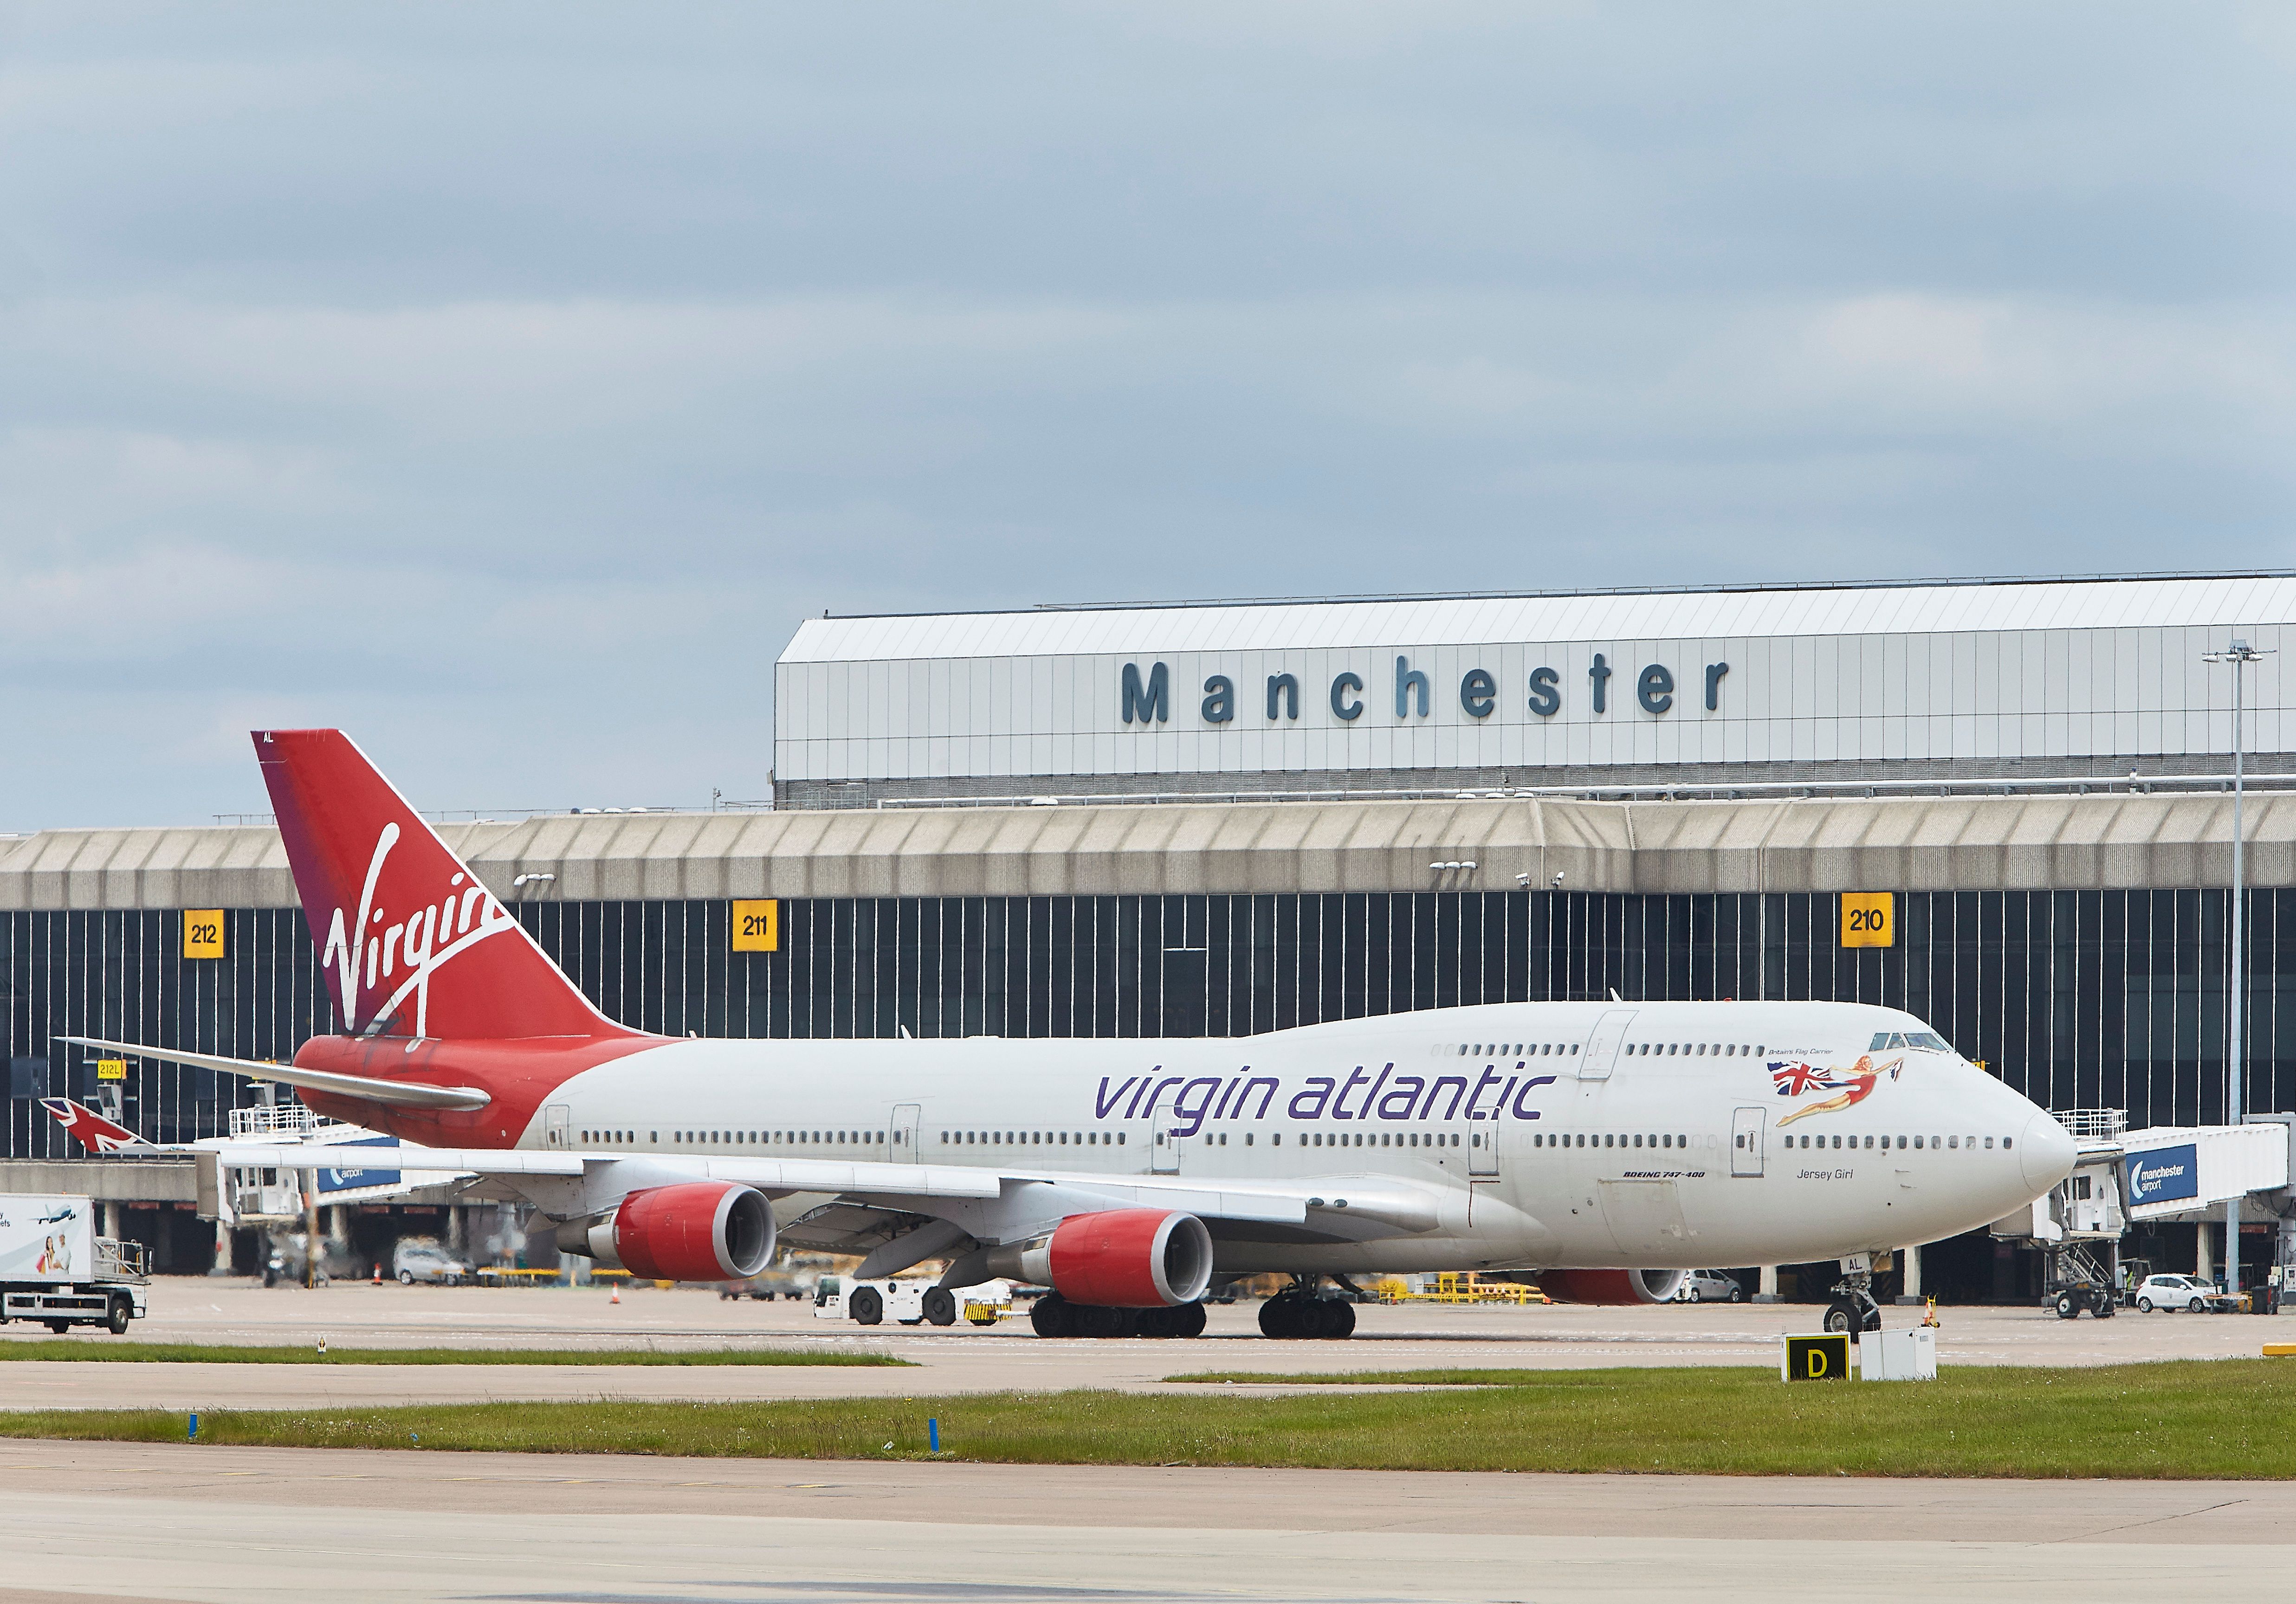 Manchester Virgin Atlantic Airport